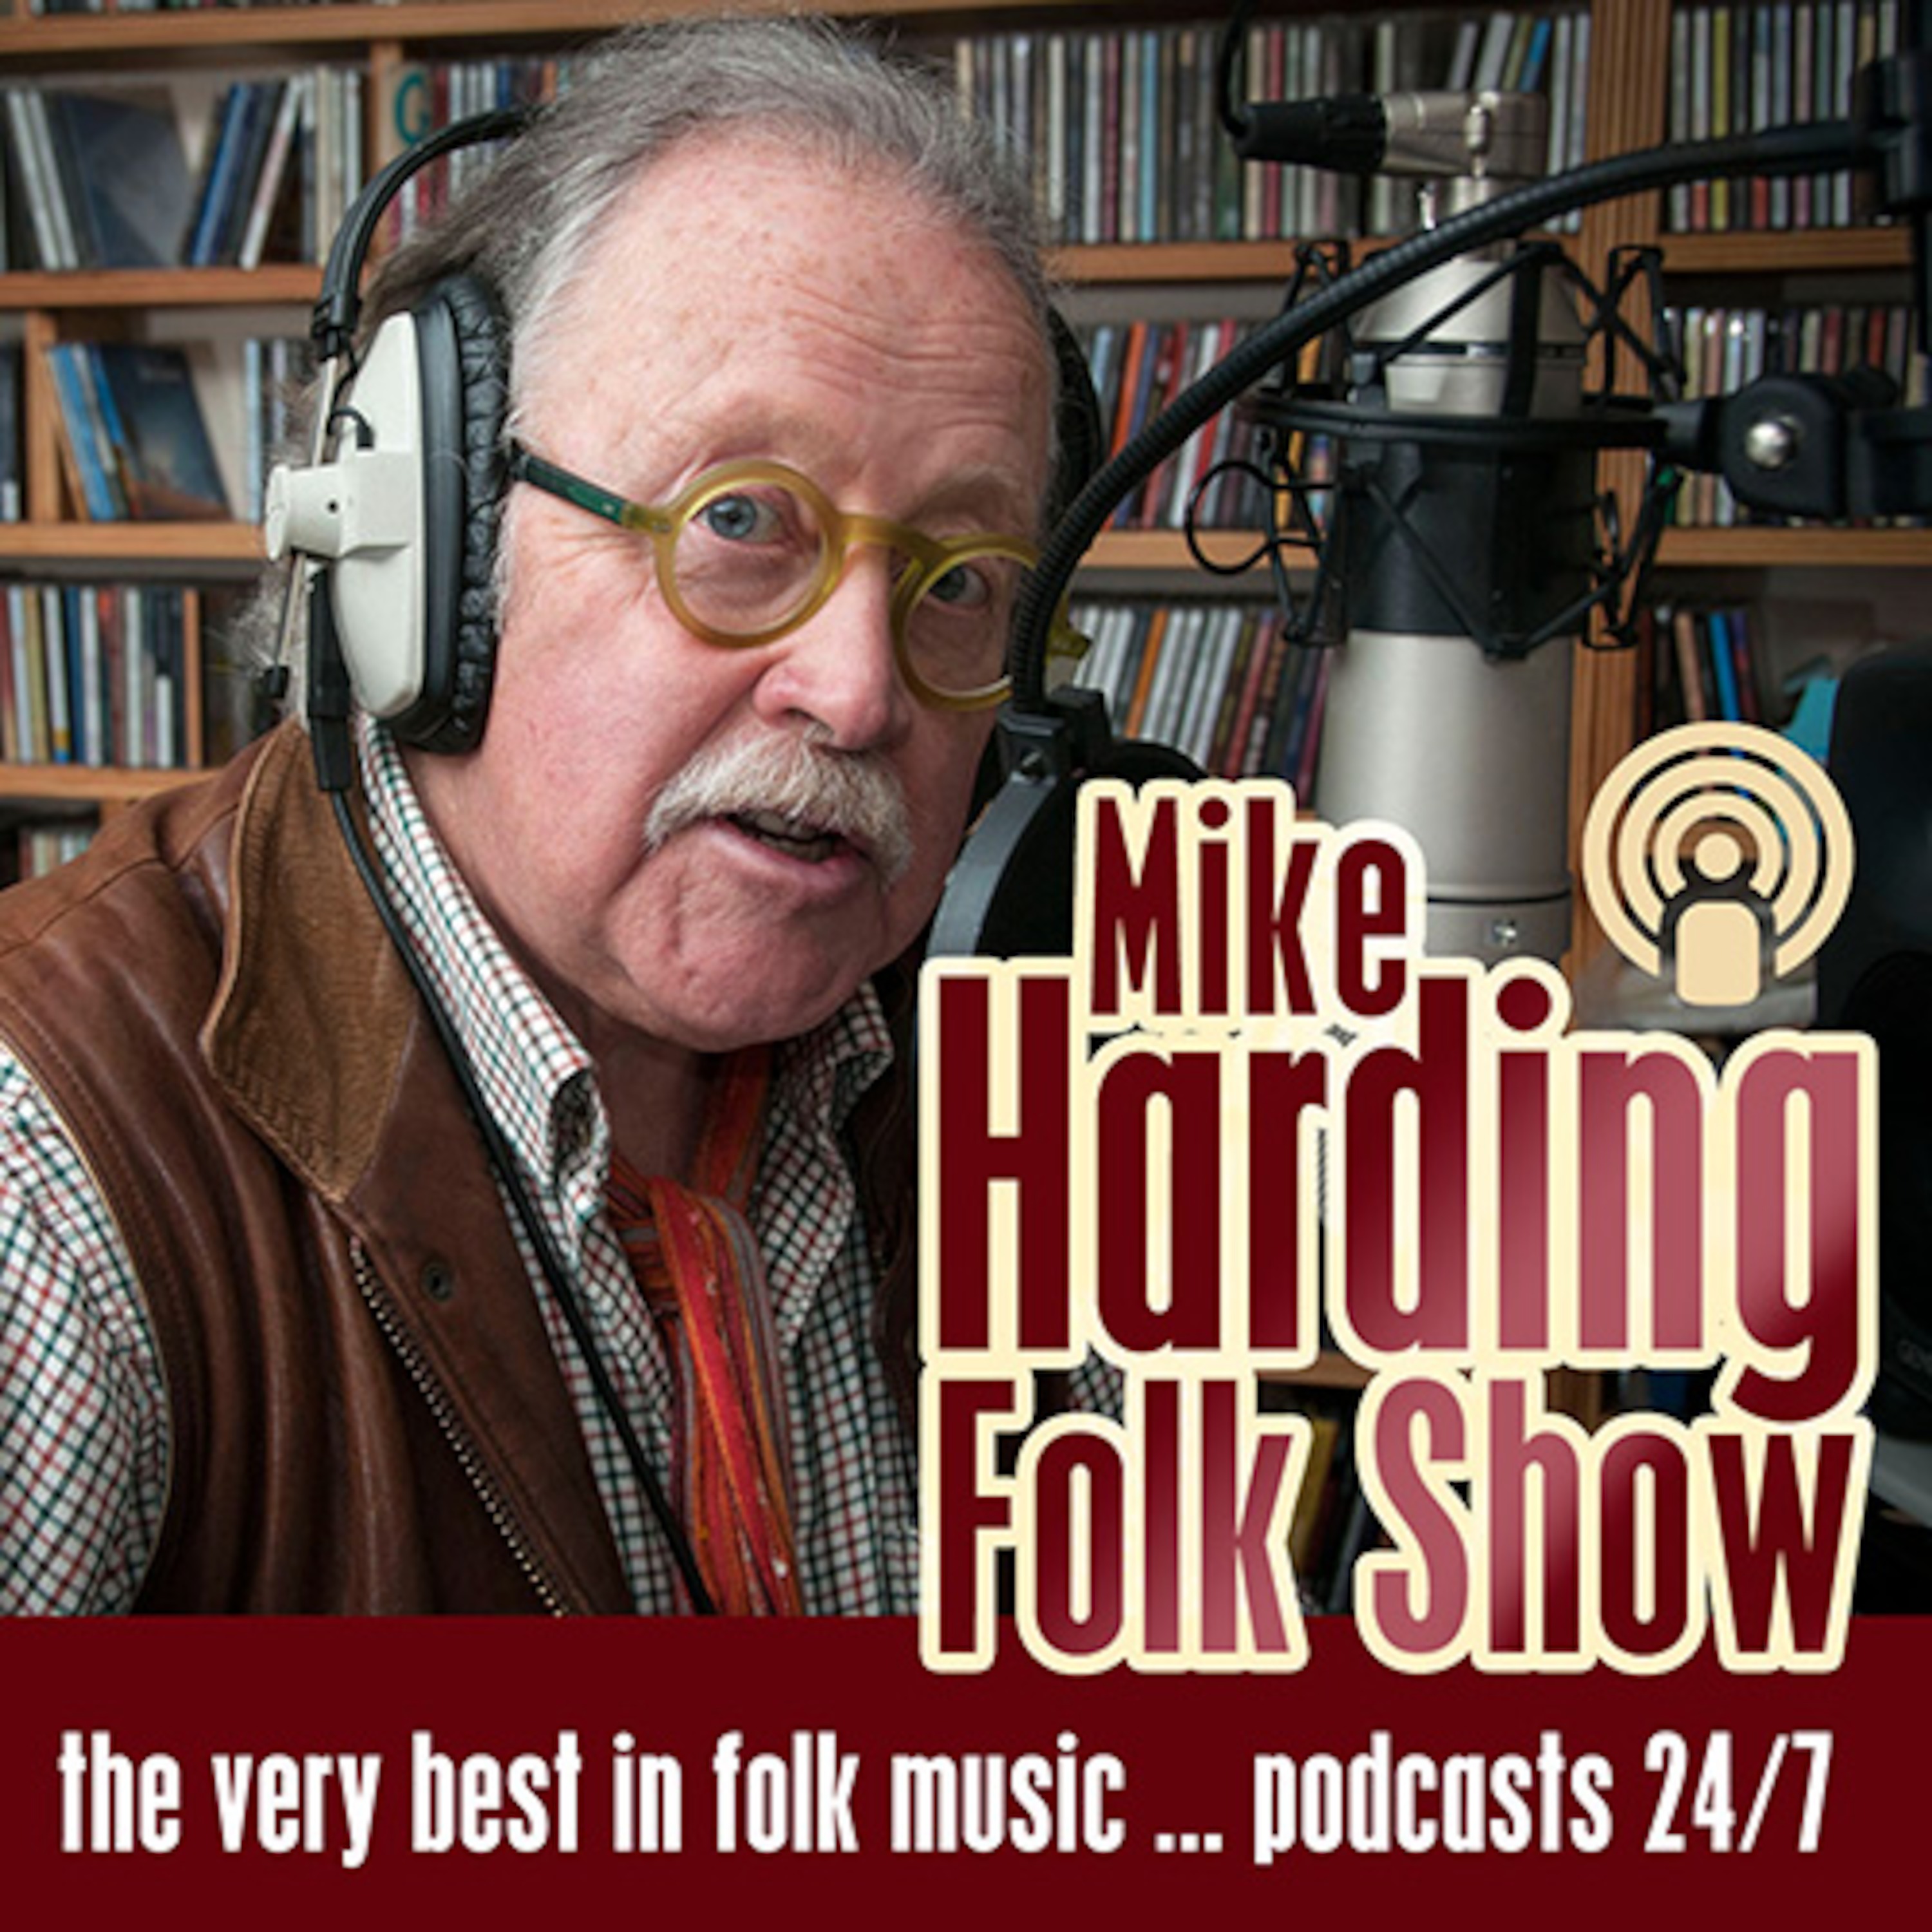 Mike Harding Folk Show 186